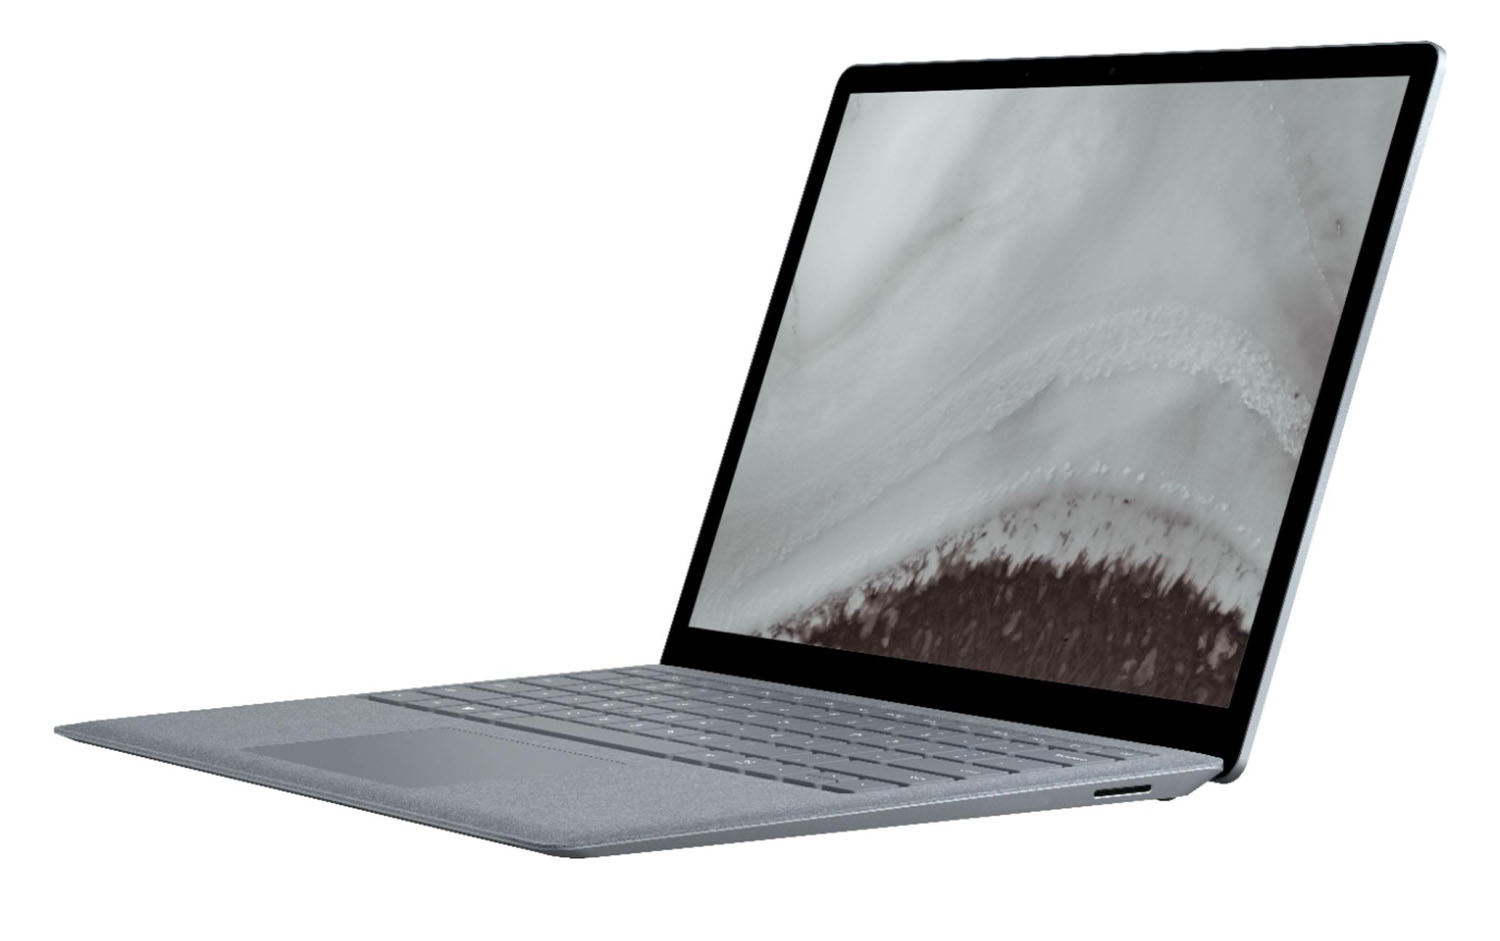 Microsoft Surface Laptop 2 Intel Core i7 8th Gen 8GB RAM 256GB SSD Touchscreen Windows 10 Home